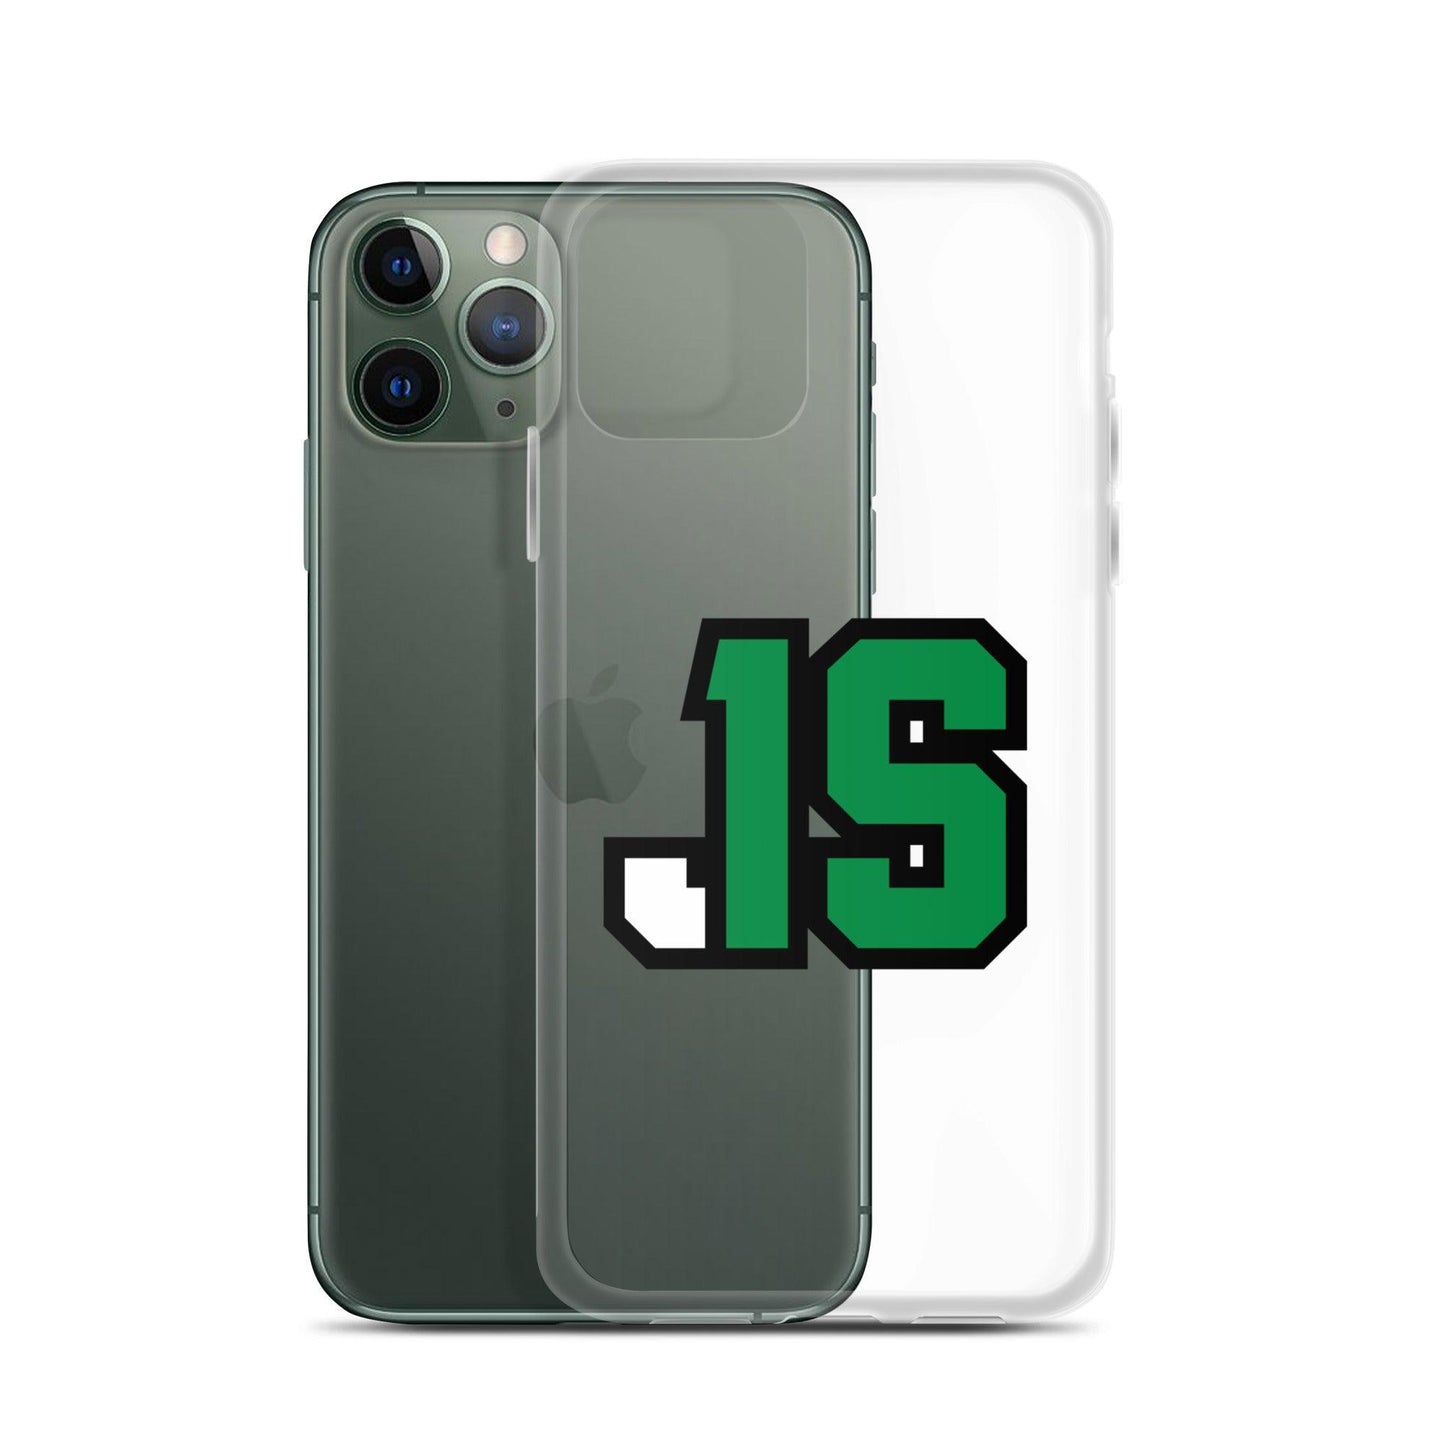 Jyaire Shorter "JS1" iPhone Case - Fan Arch